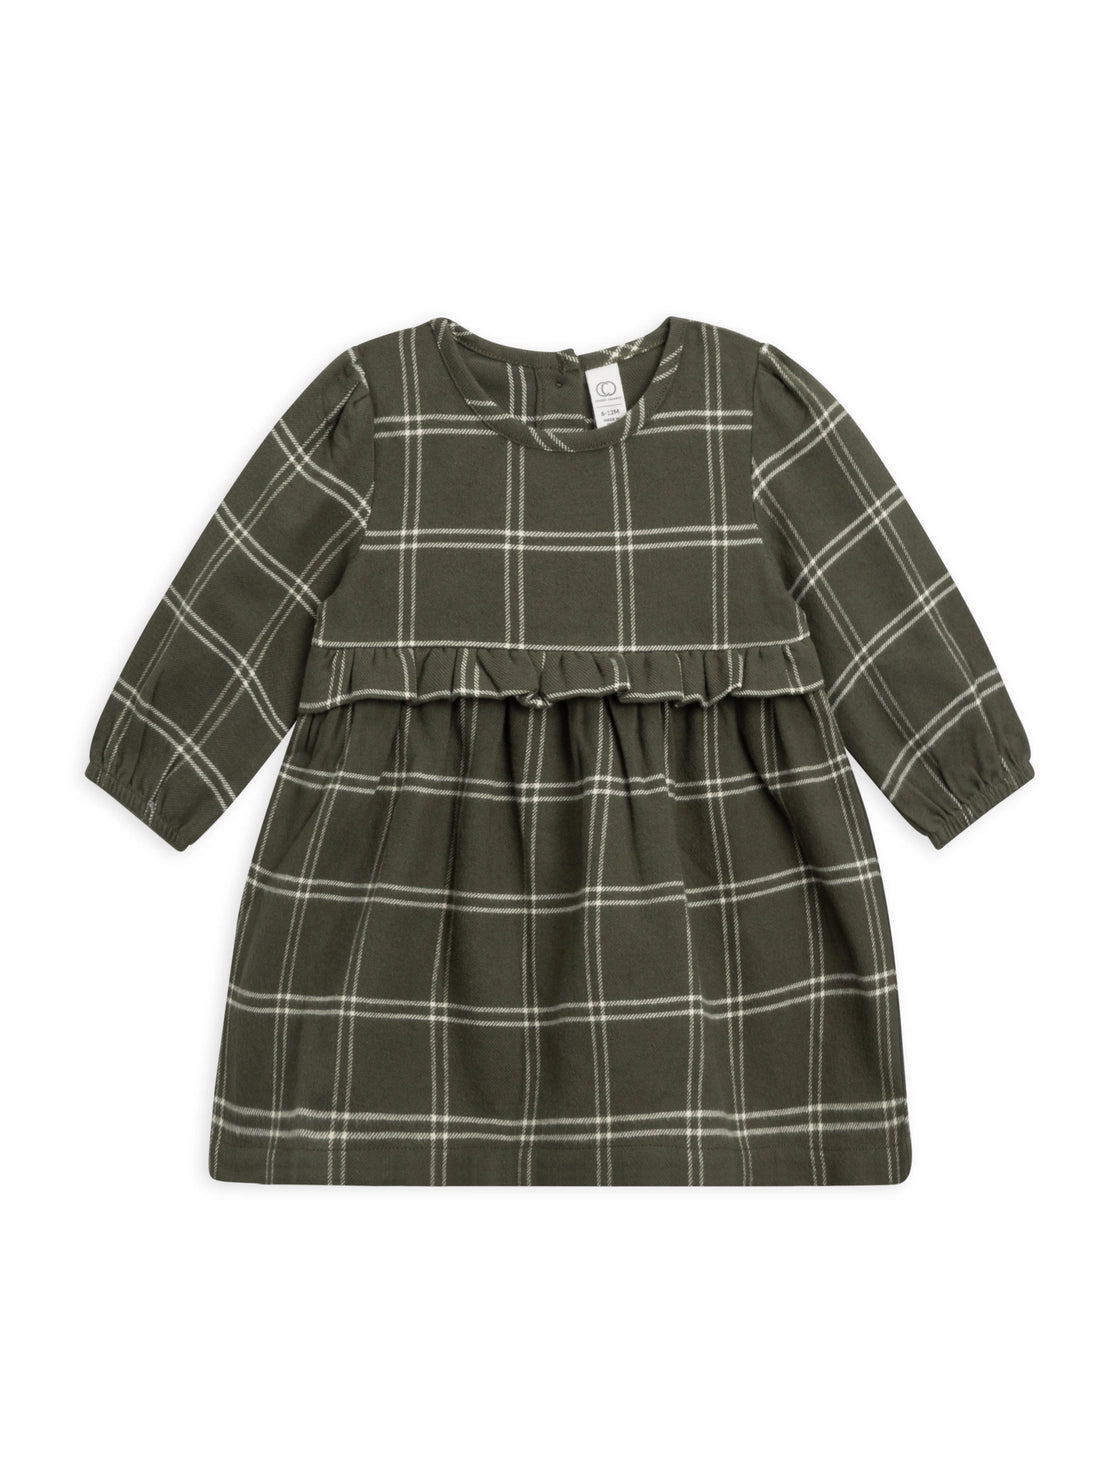 Baby and Kids Sydney Flannel Ruffle Dress - Cypress Plaid